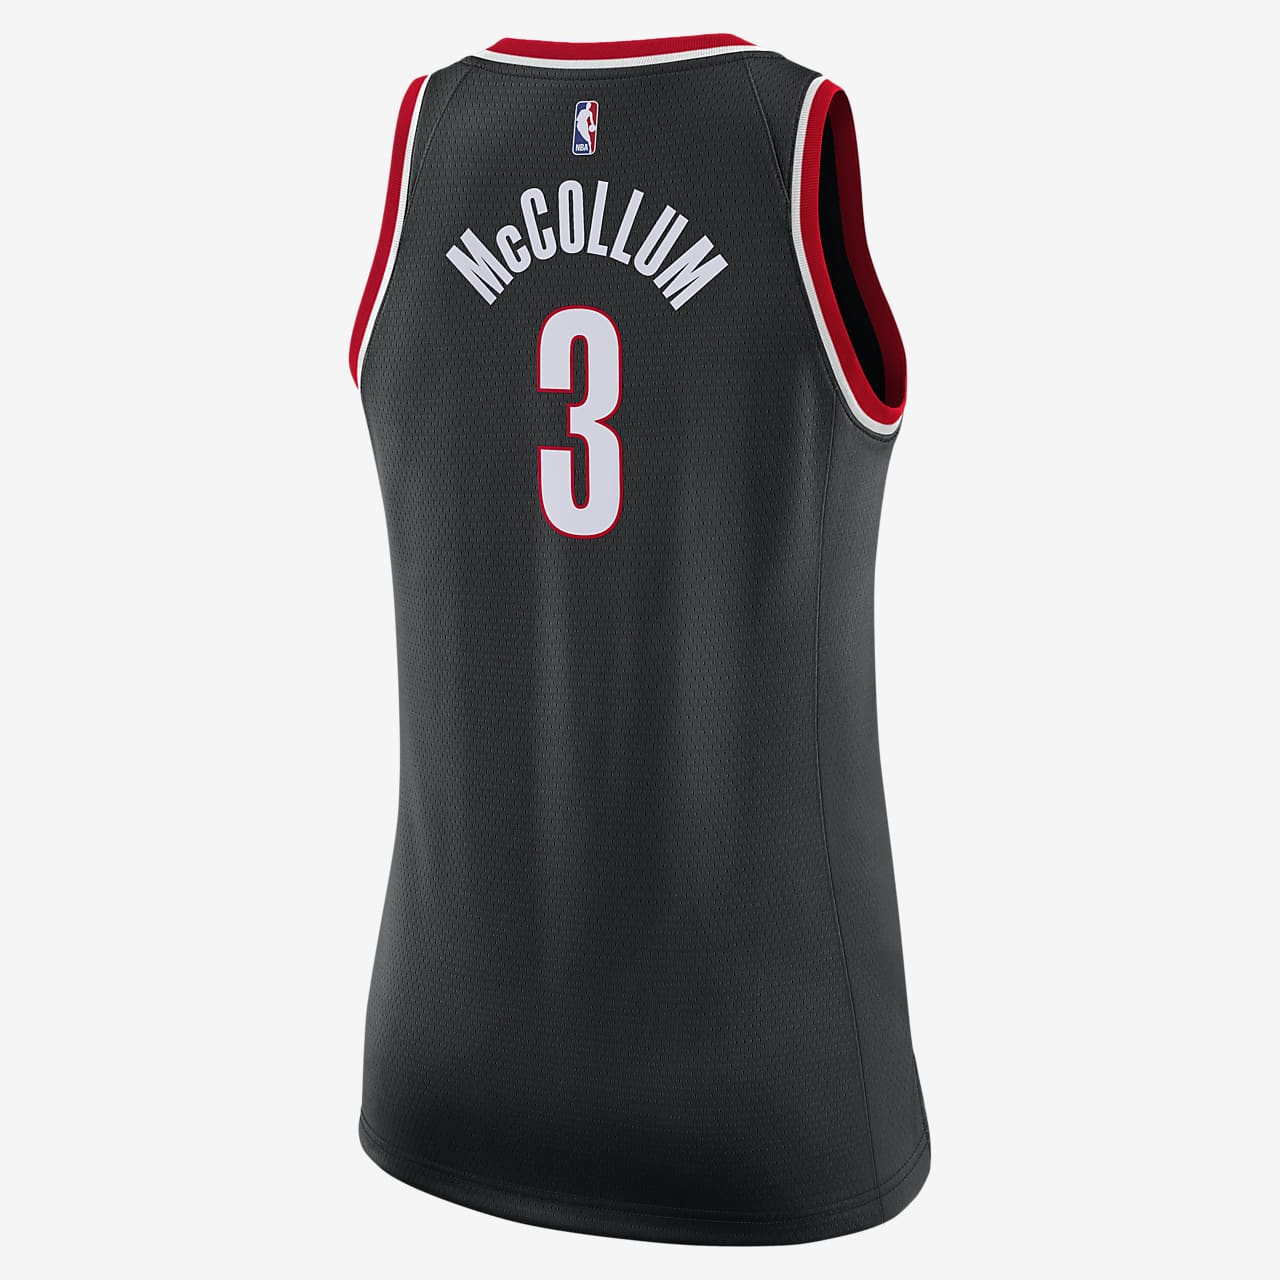 C.J. McCollum Trail Blazers Icon Edition Women's Nike NBA Swingman Jersey